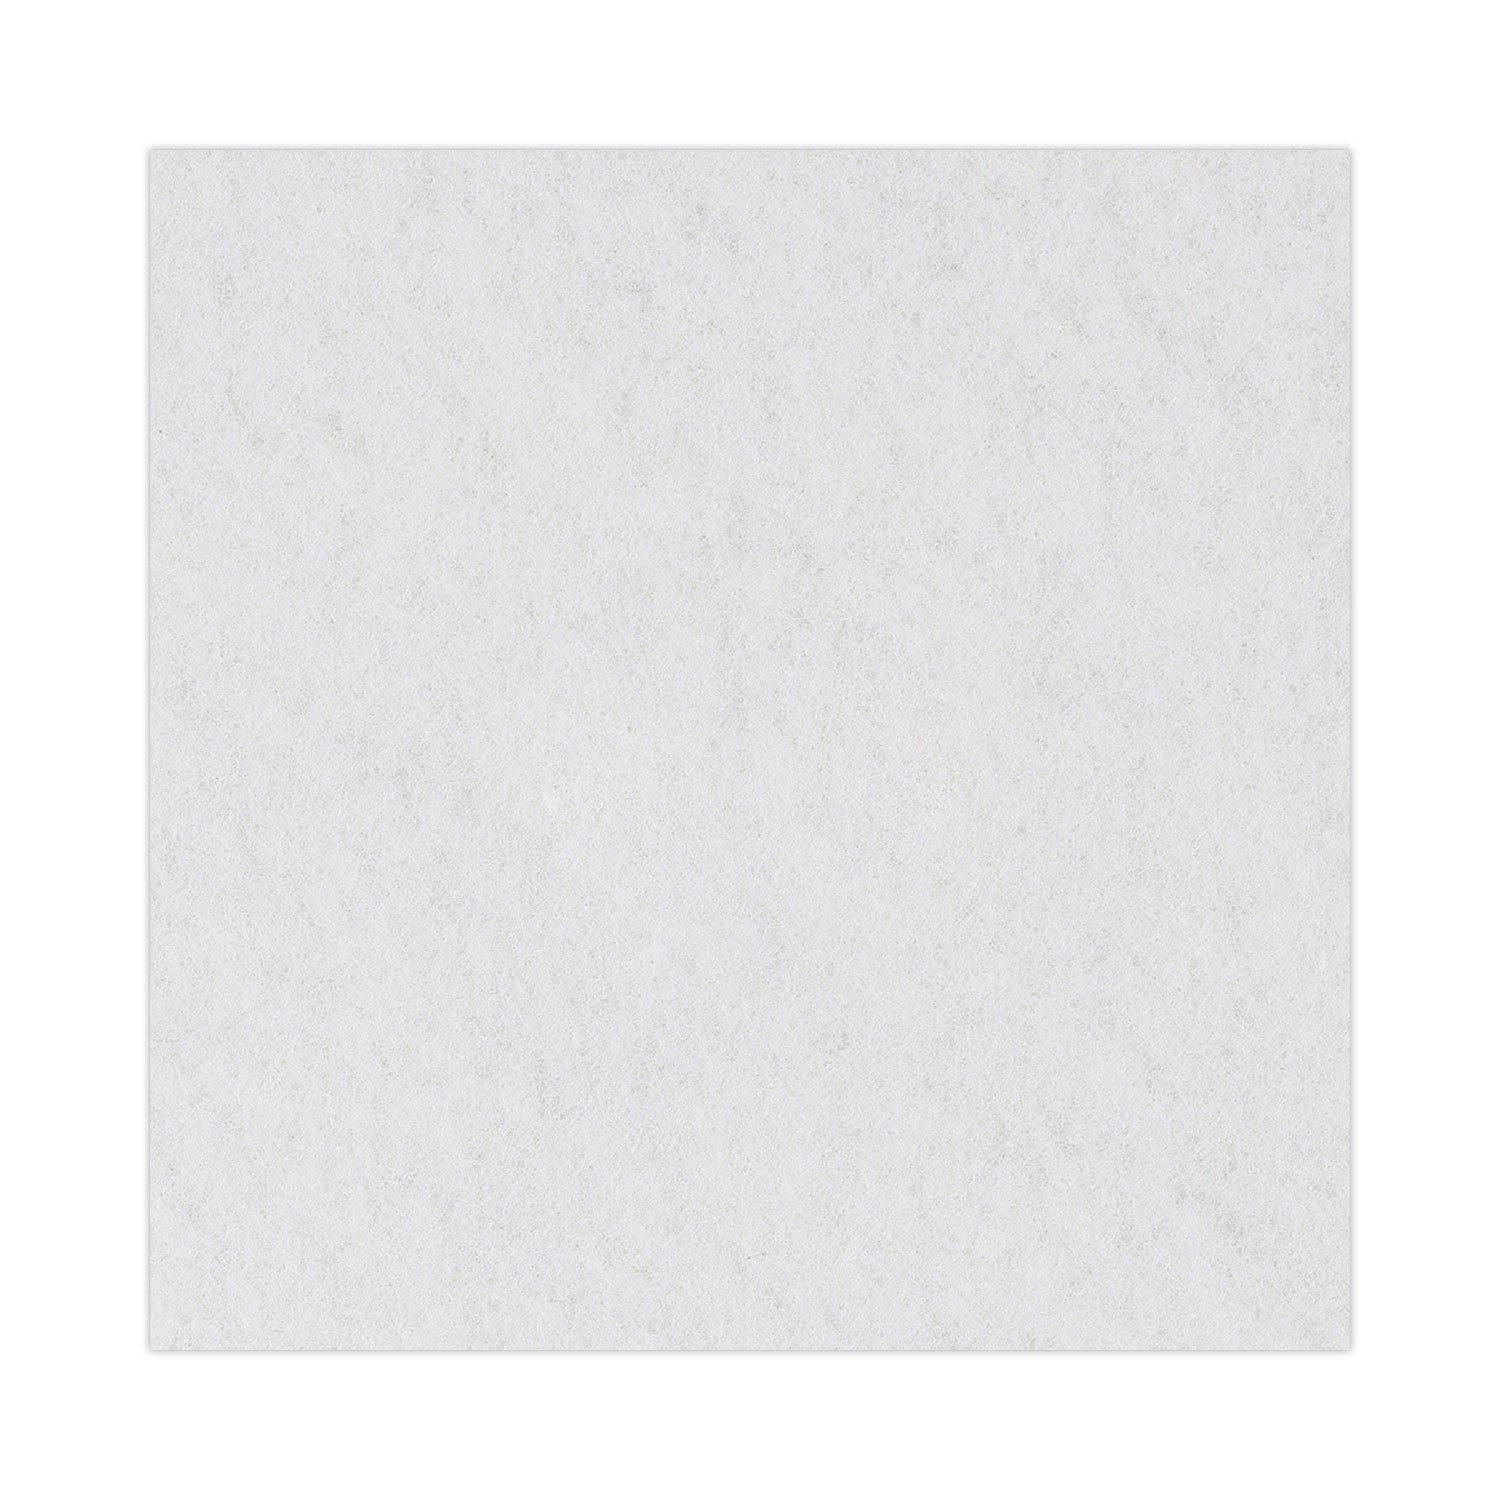 polishing-floor-pads-15-diameter-white-5-carton_bwk4015whi - 6